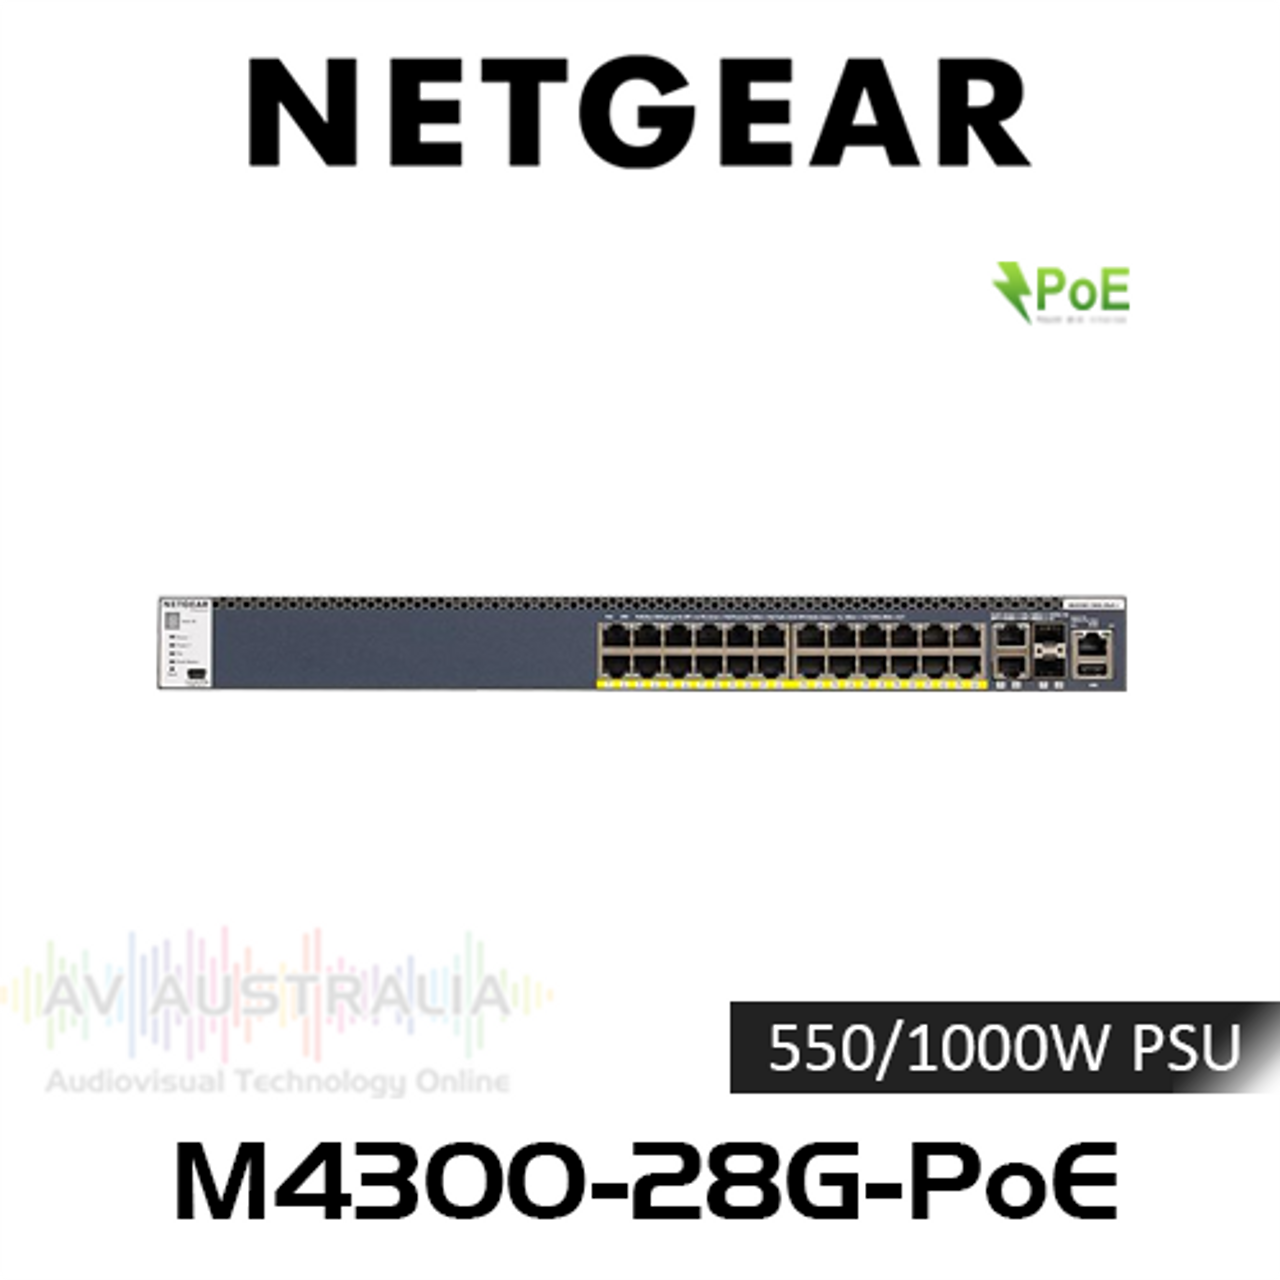 Netgear M4300-28G-POE 24-Port PoE Gigabit Layer 3 Stackable Managed Switch with 2x 10G & 2x SFP & PSU